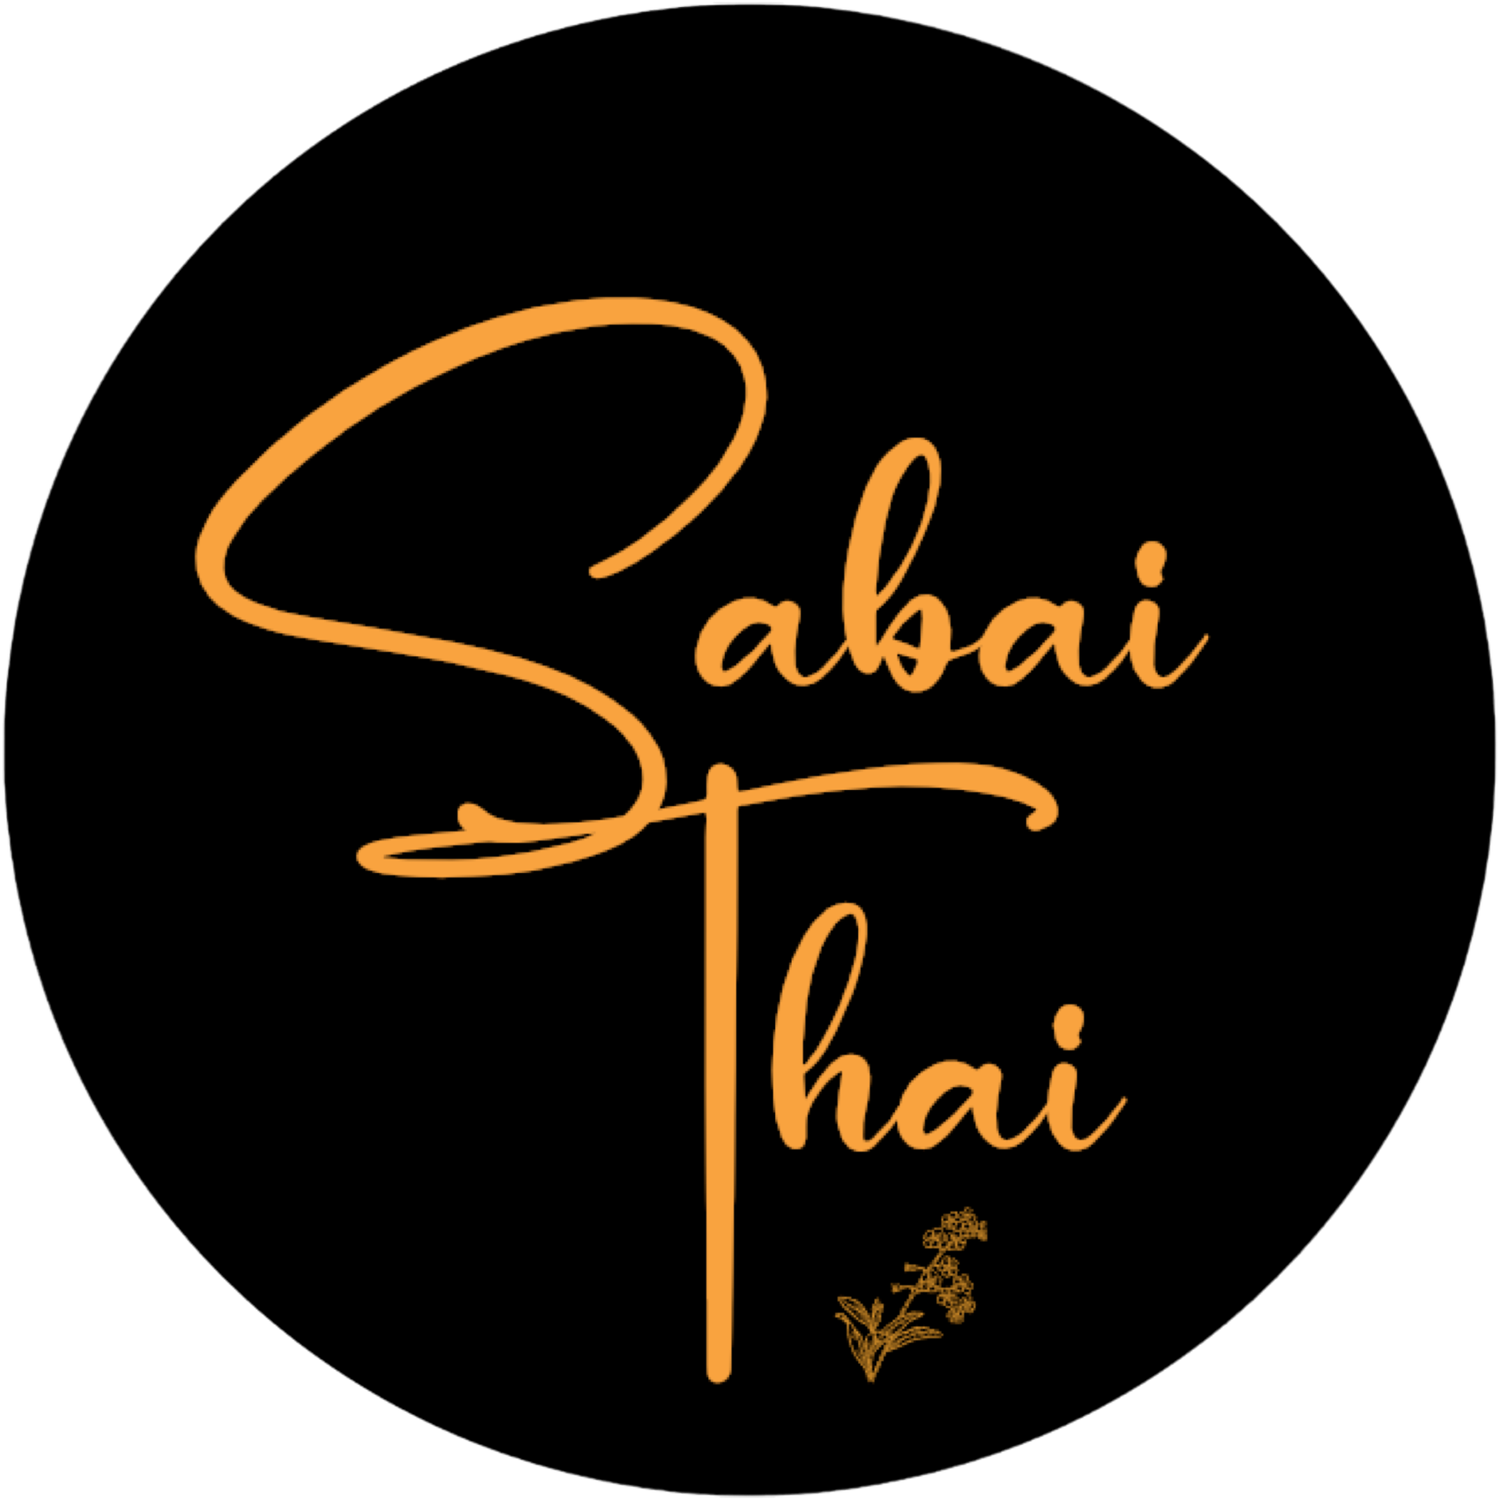 Sabai Thai Cuisine